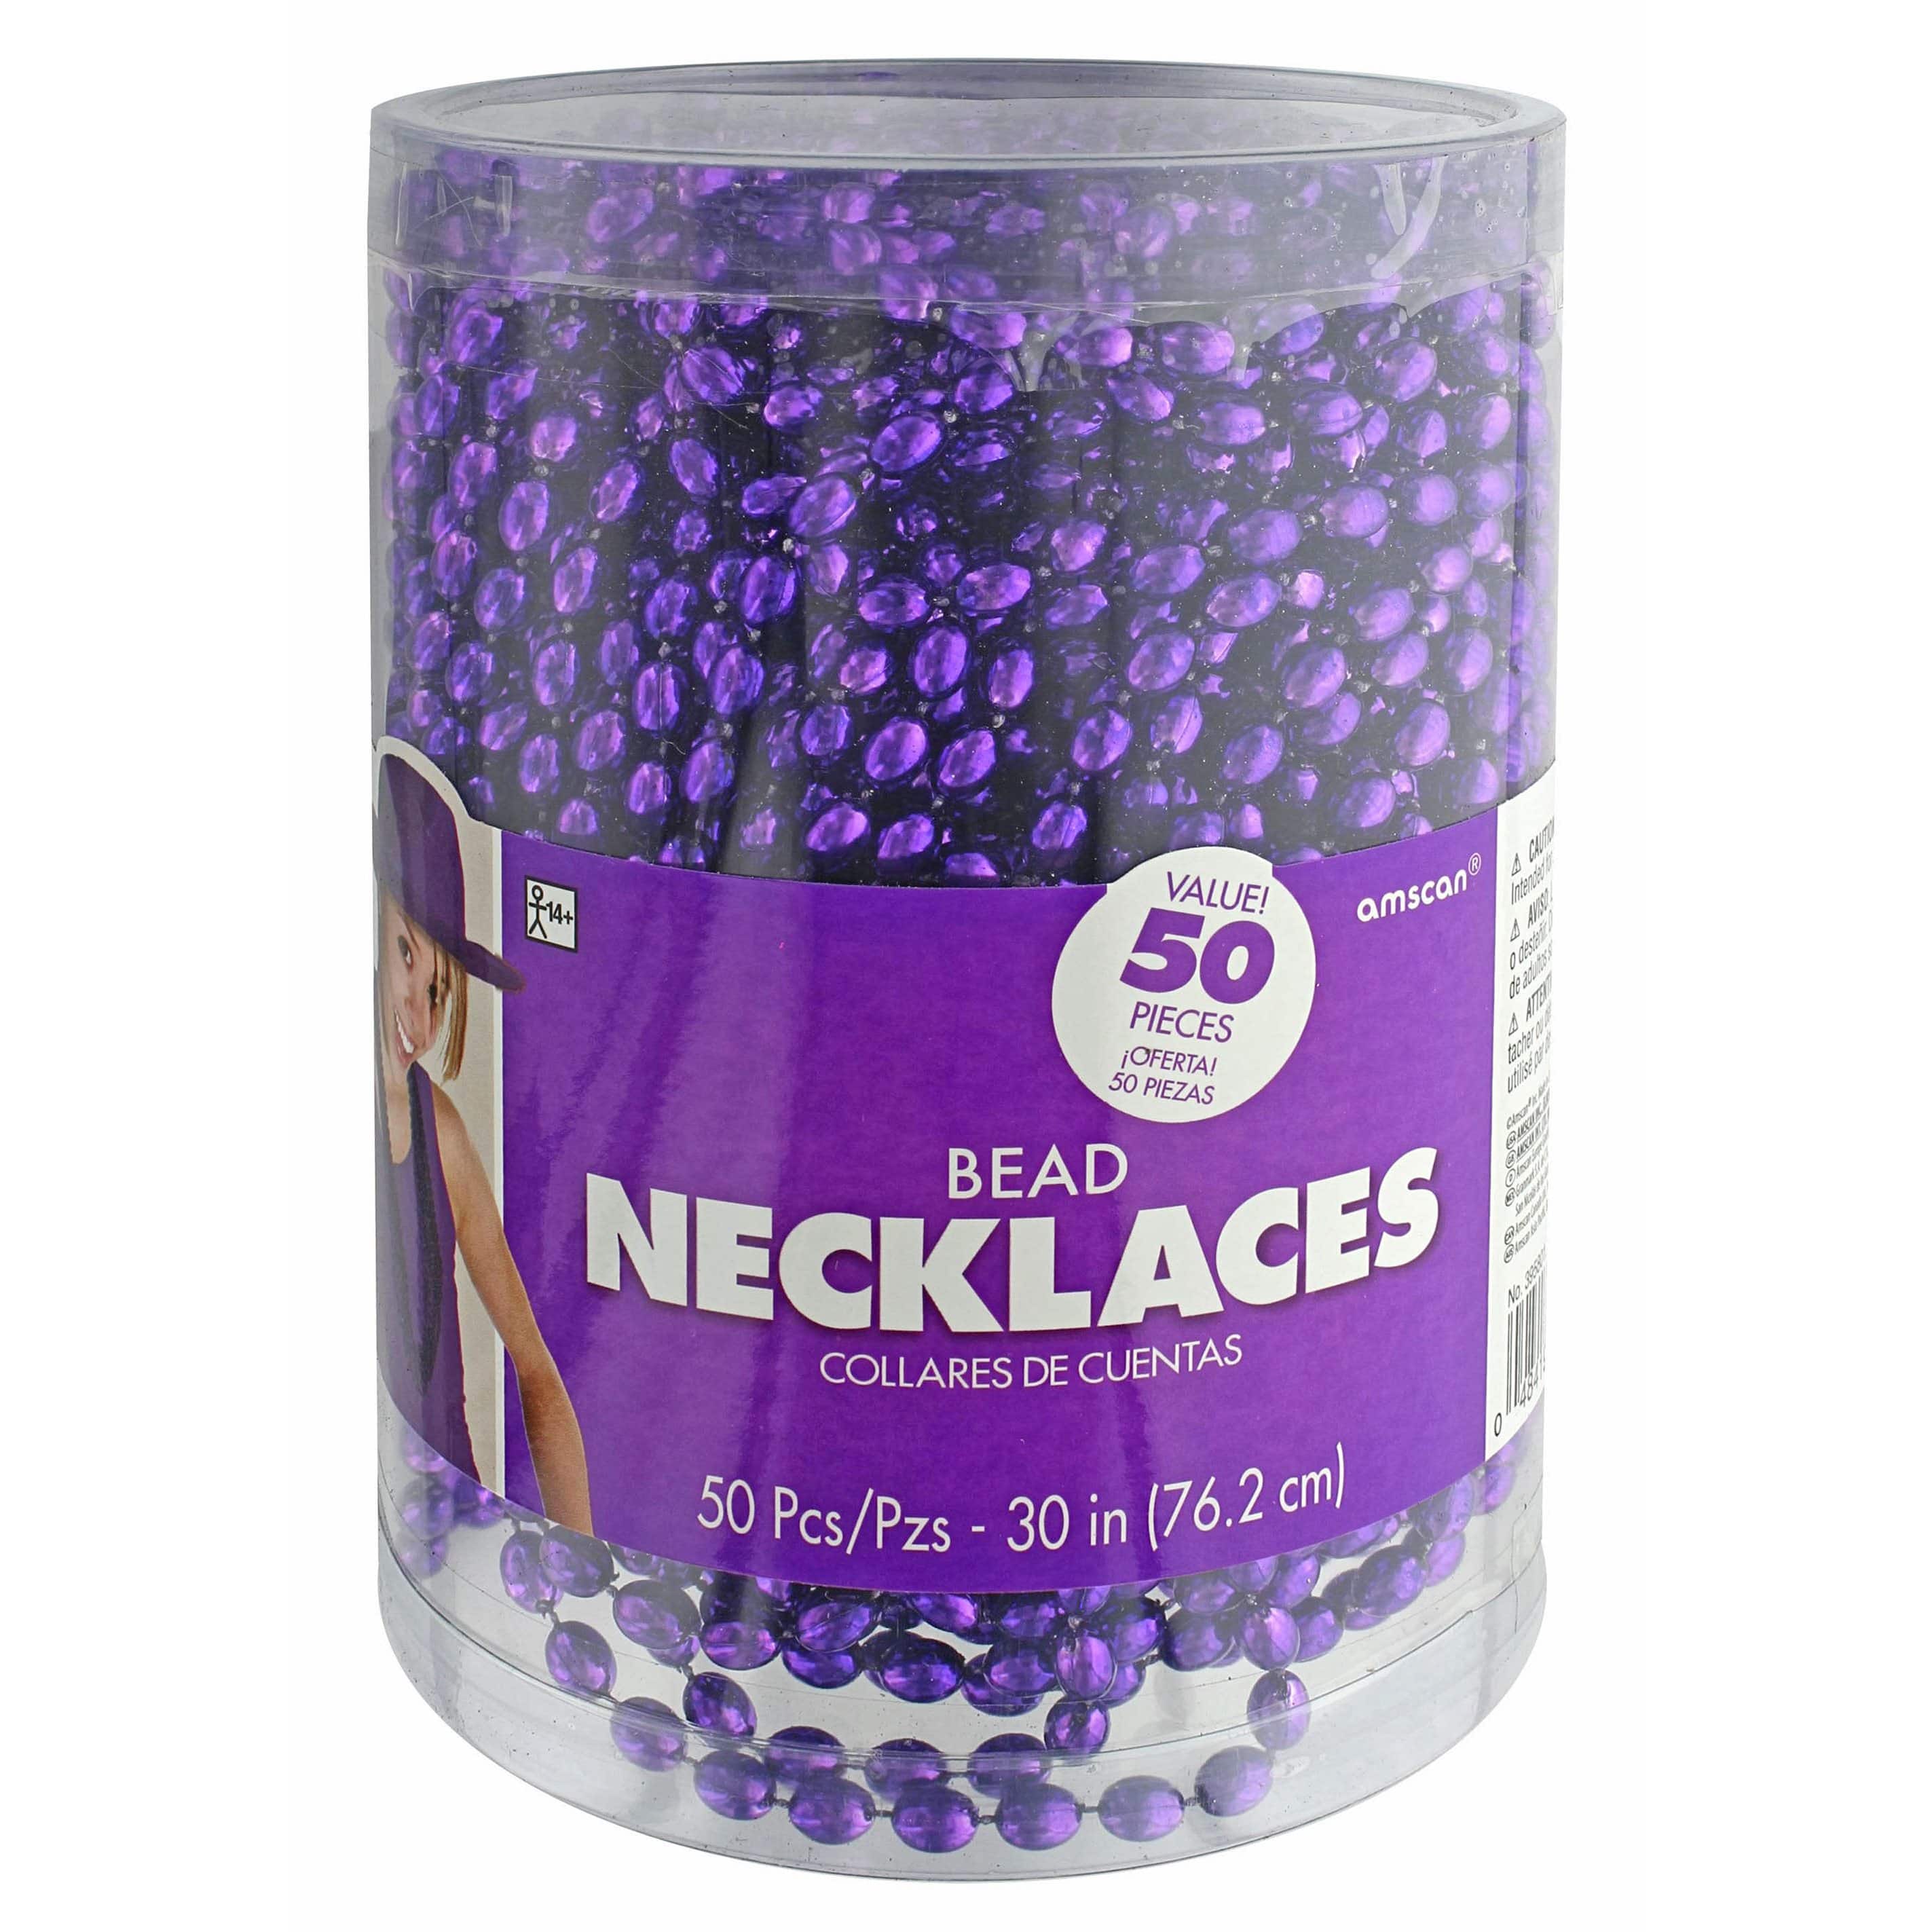 30" Metallic Bead Party Necklaces, 50ct.